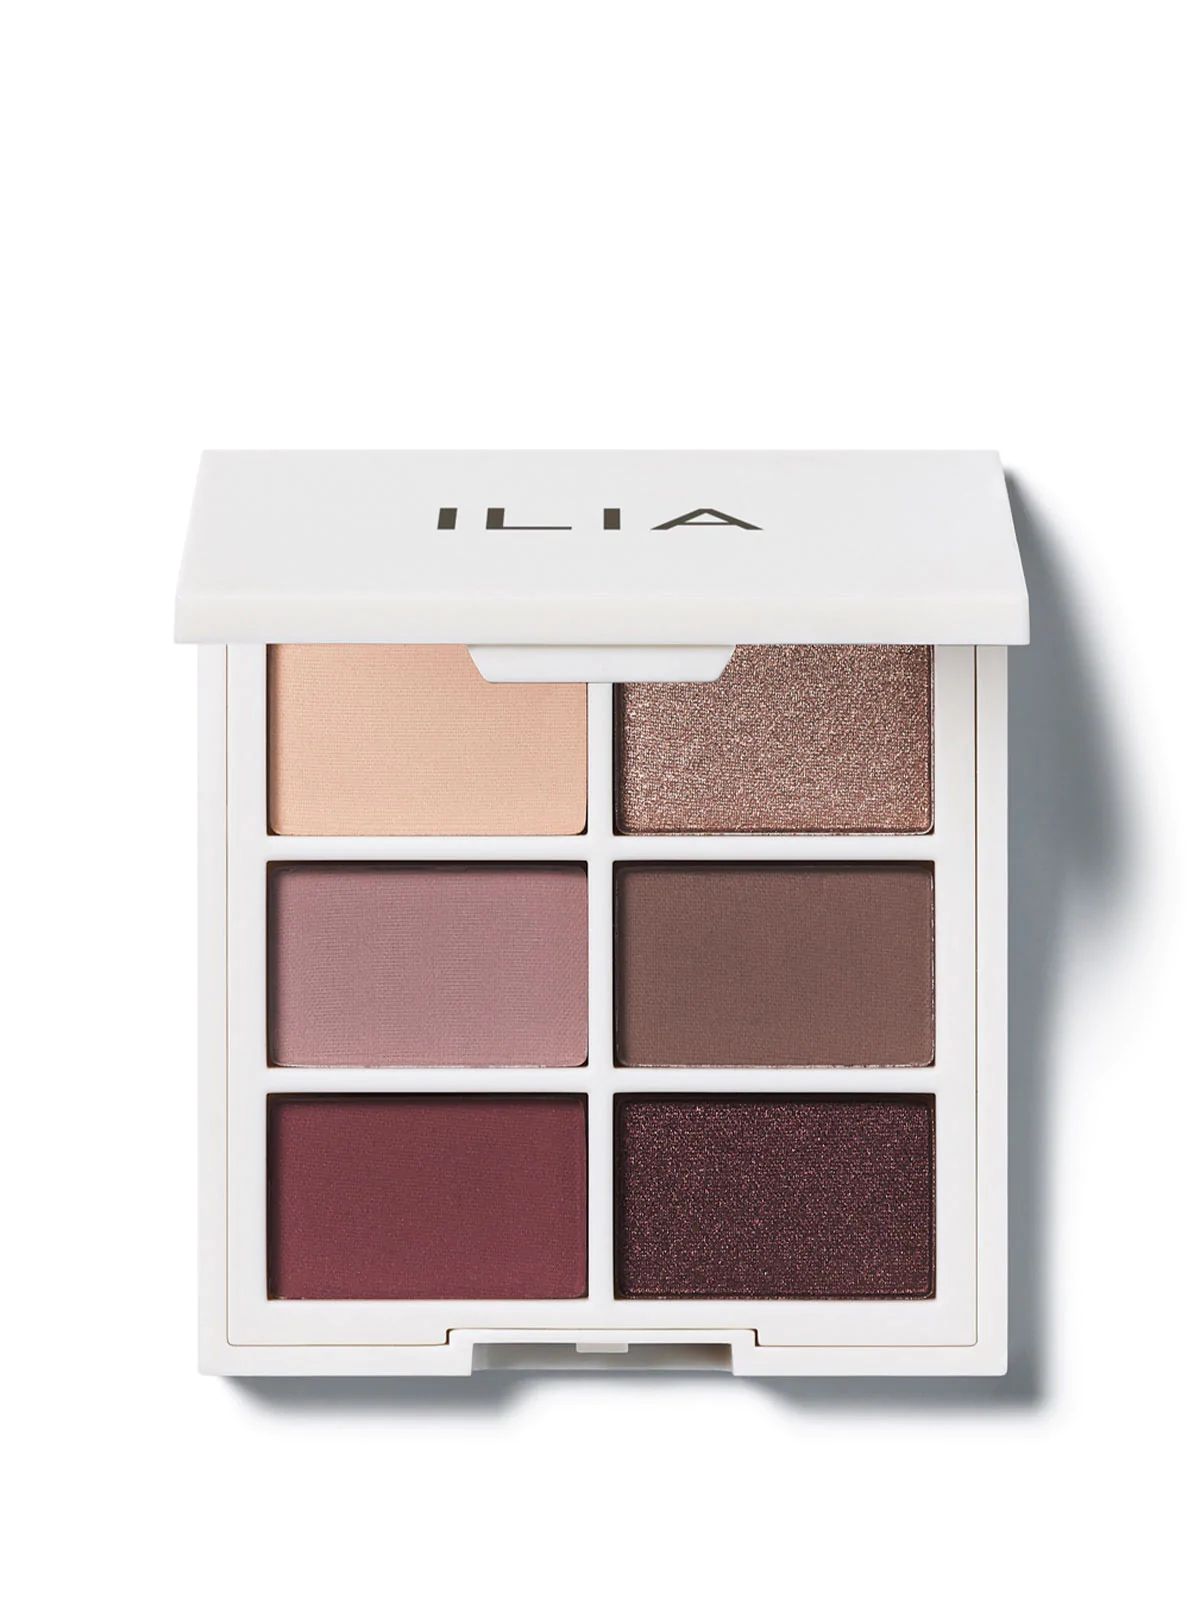 The Necessary Eyeshadow Palette in Cool Nude | ILIA Beauty | ILIA Beauty